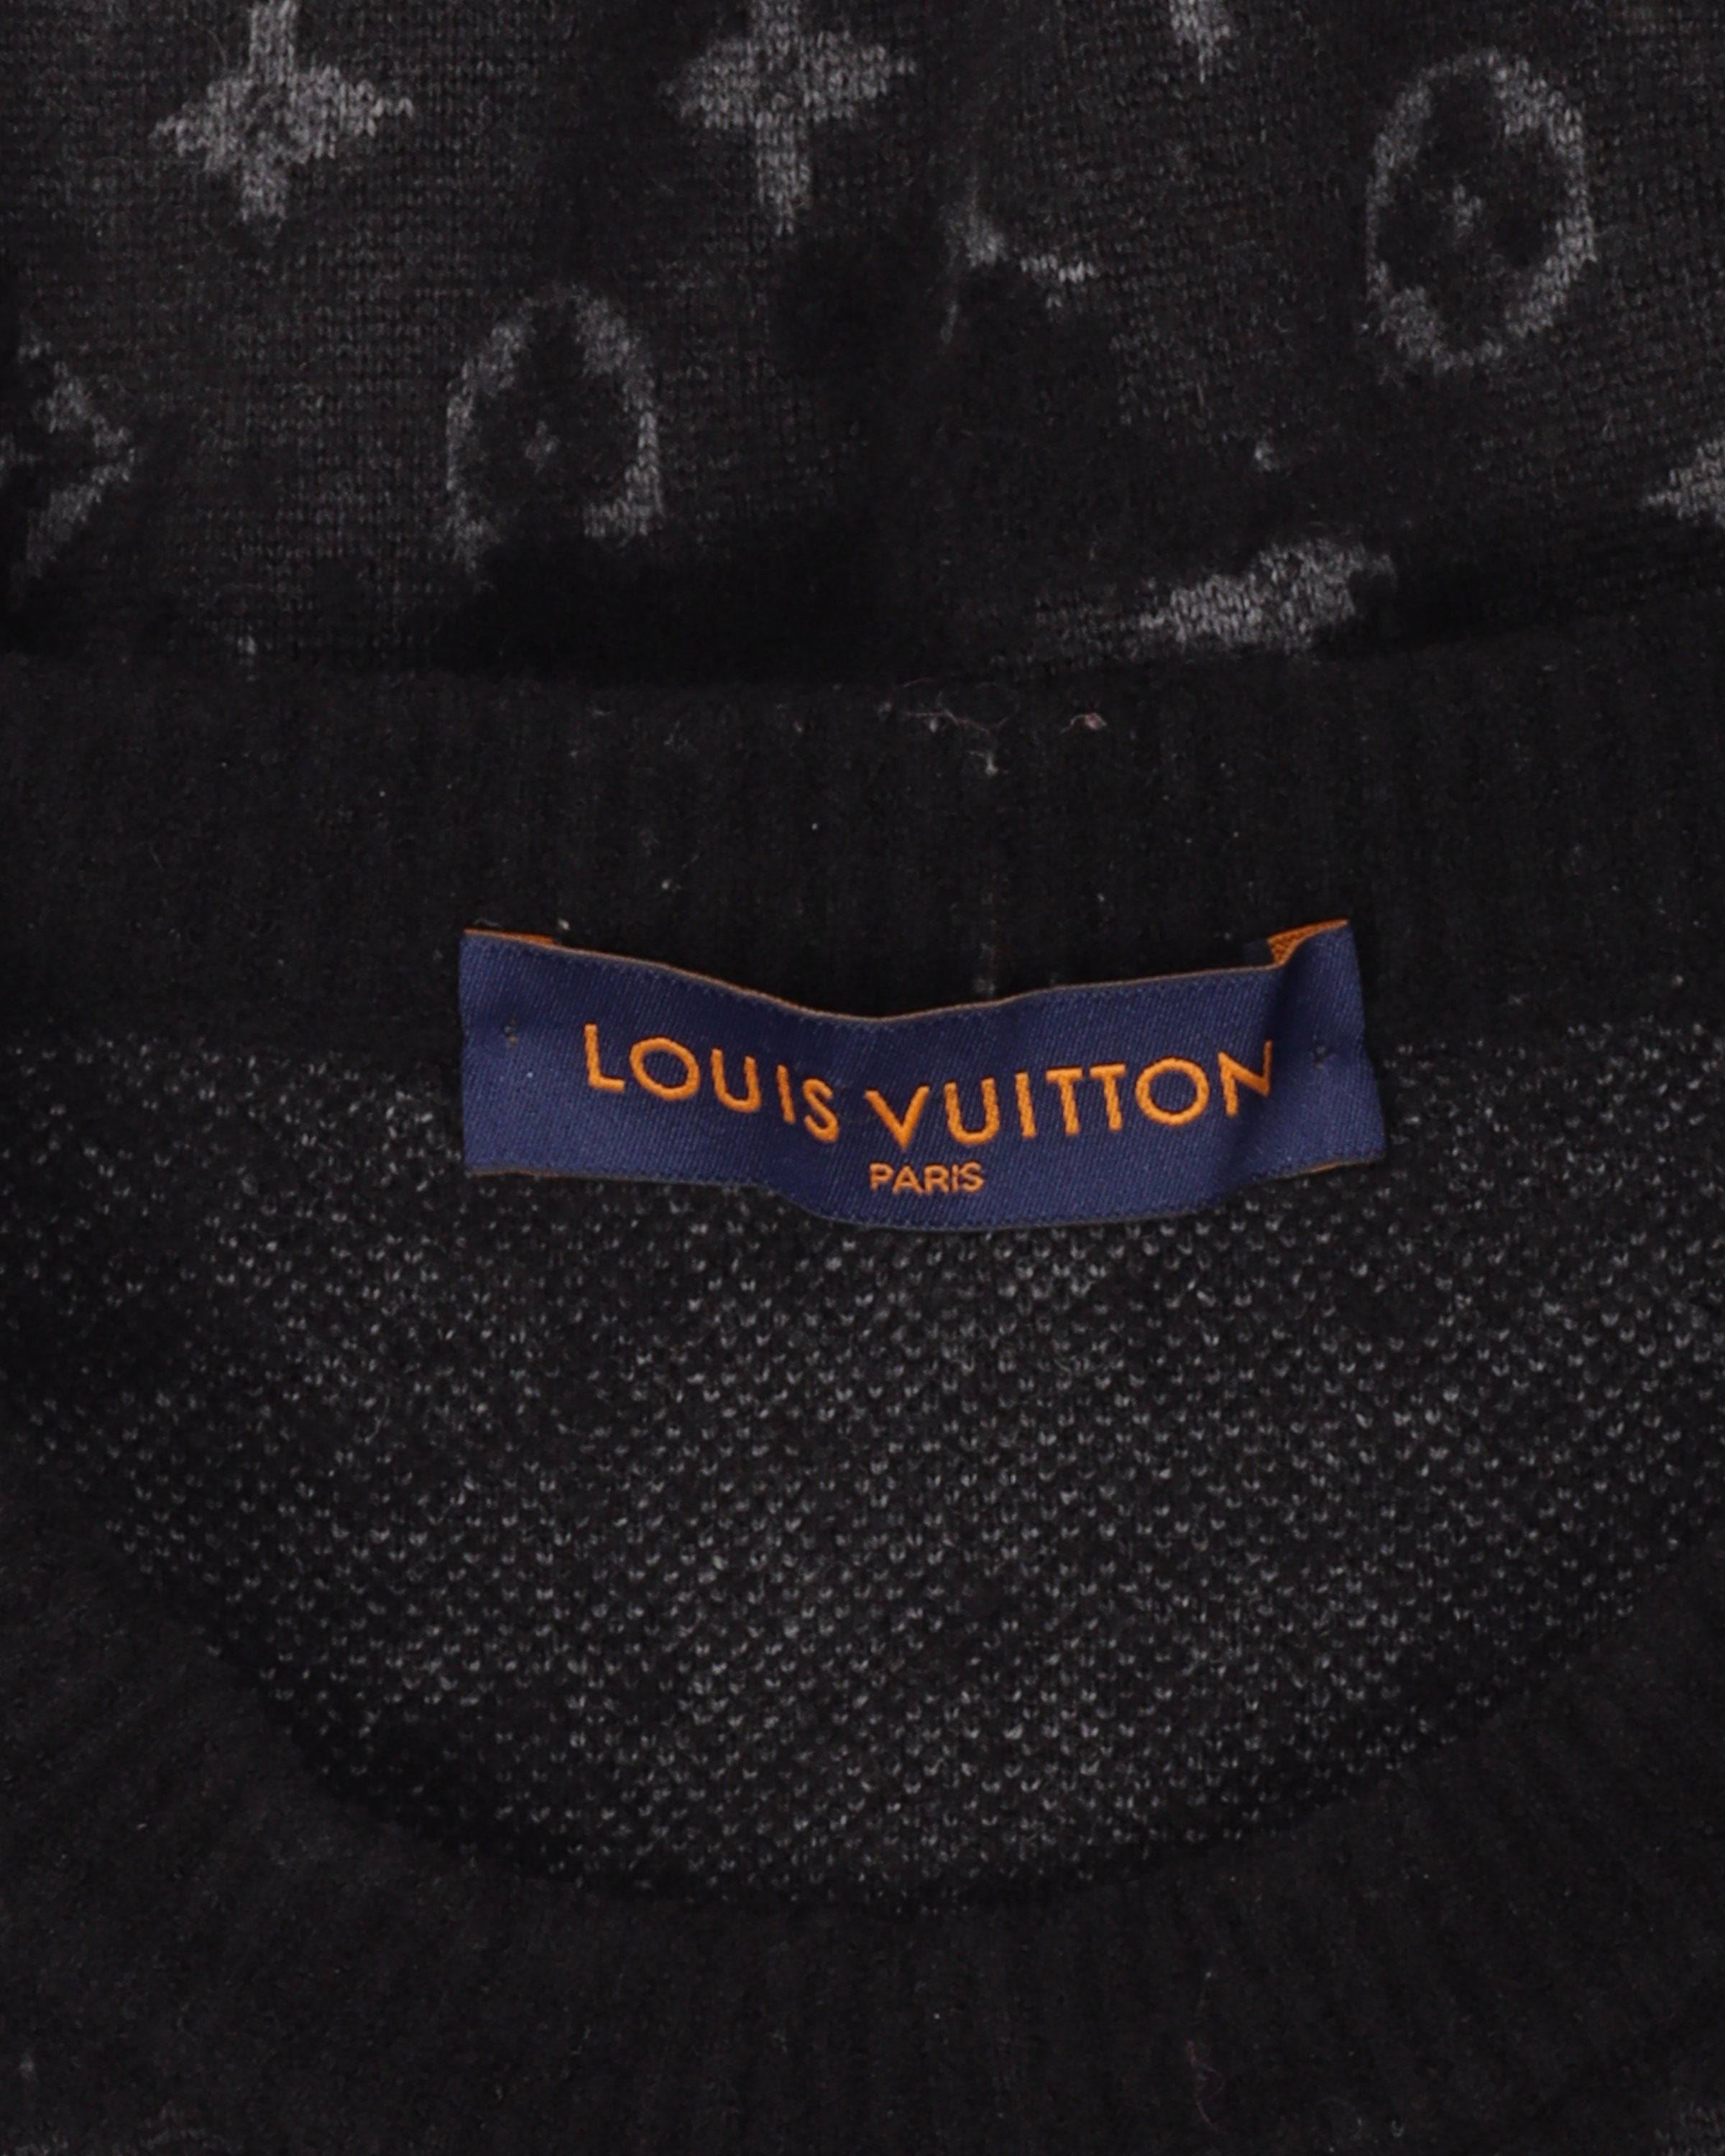 LOUIS VUITTON 1A3XJH Chevron stitch Jacquard Pullover tops knit